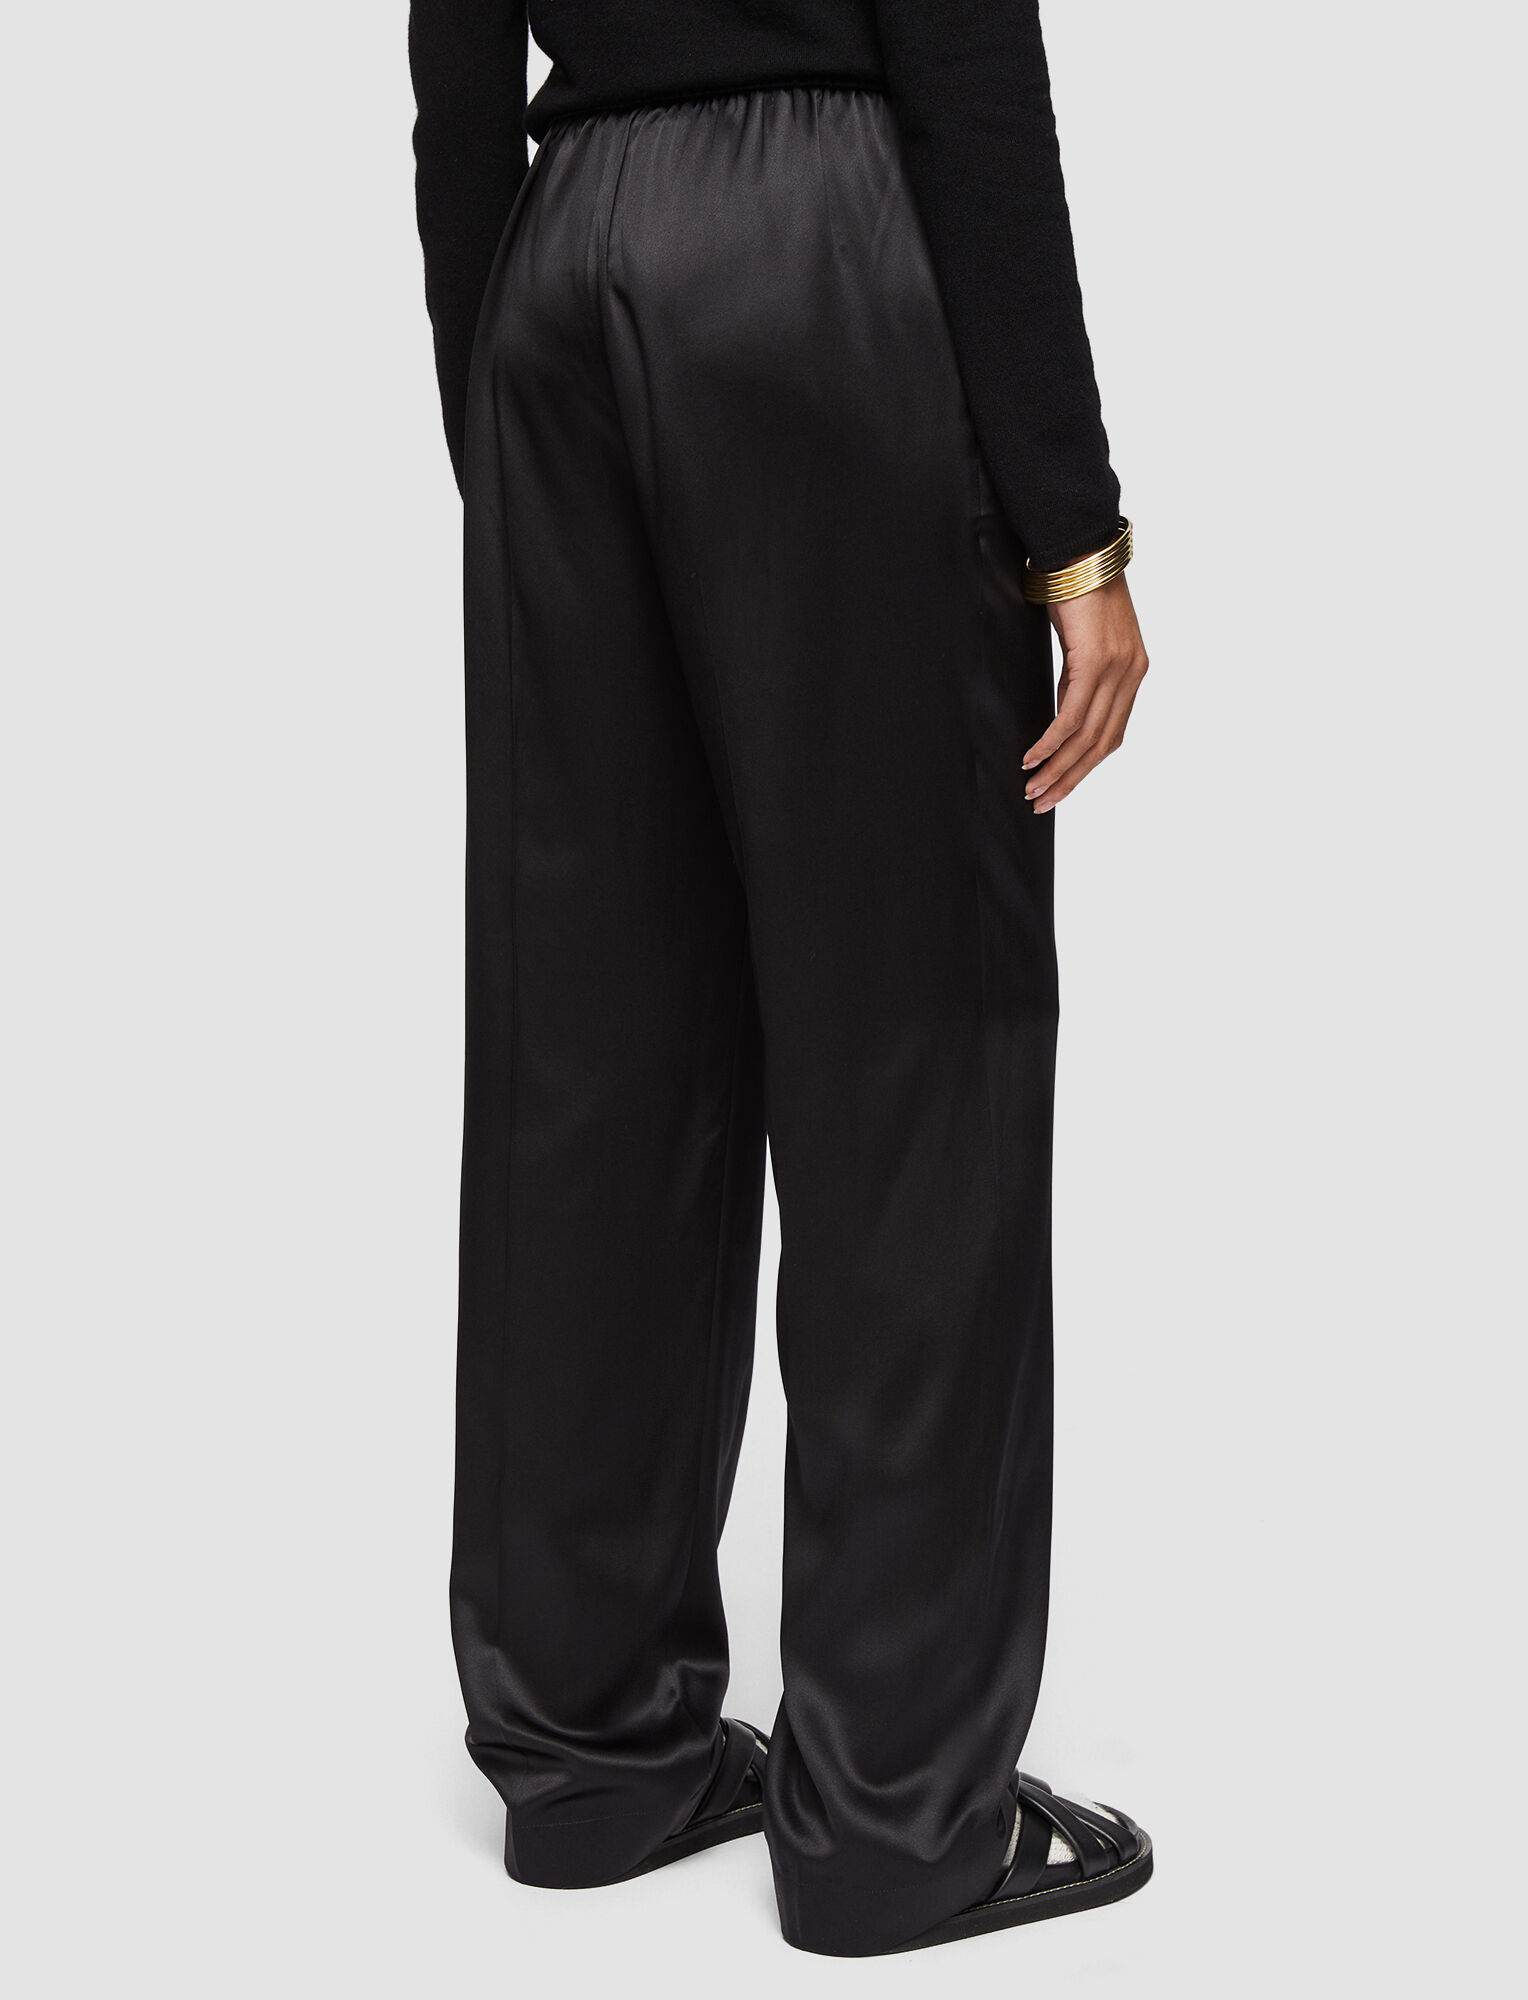 Joseph, Silk Satin Tova Trousers, in Black